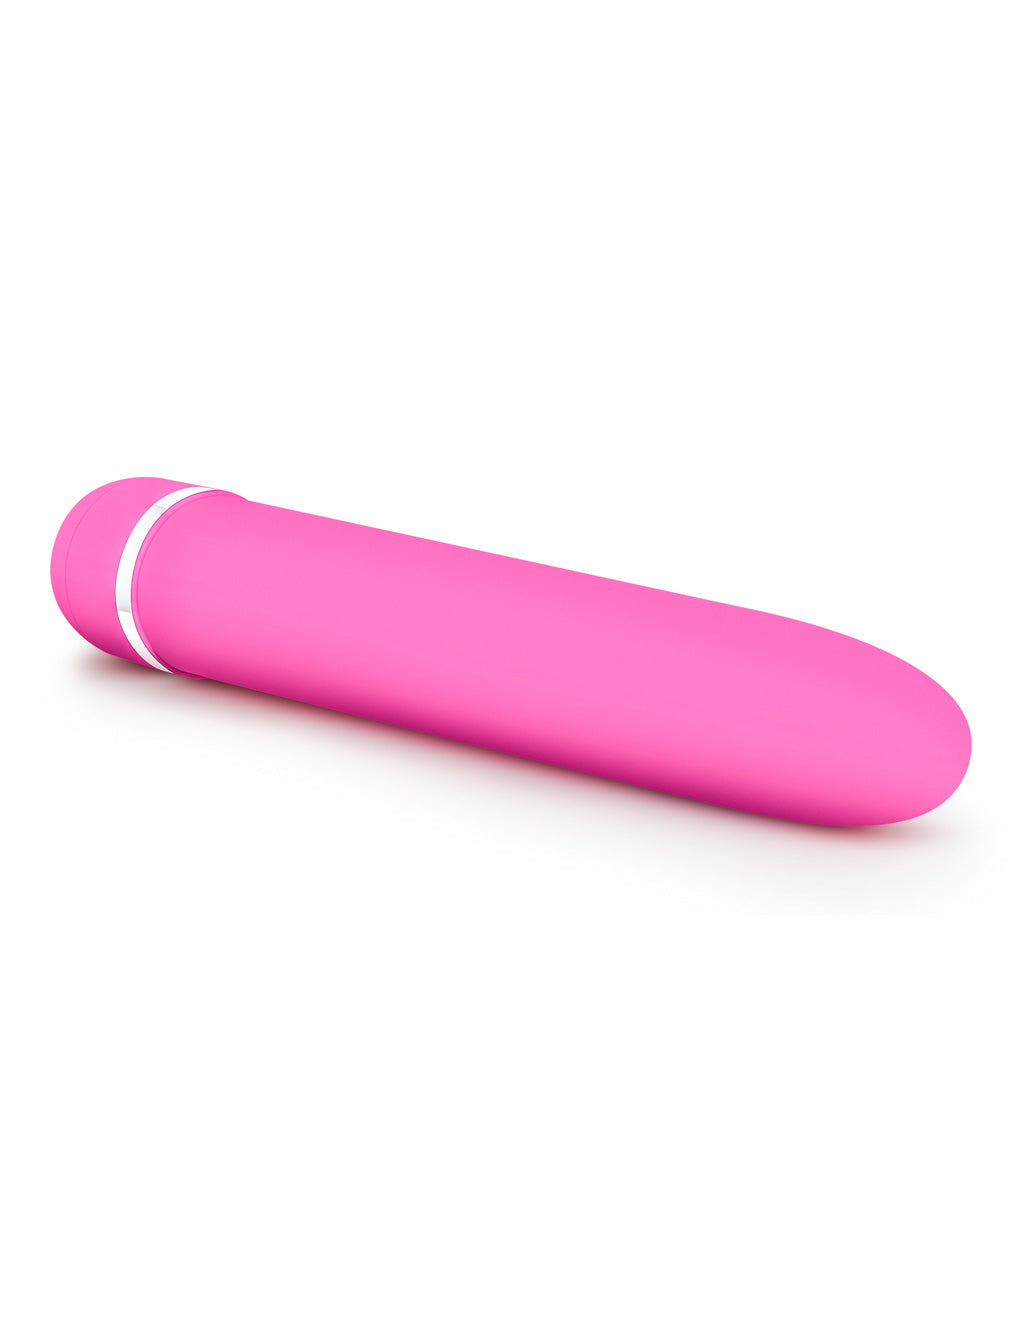 Rose Luxuriate Vibrator- Pink- Laying down